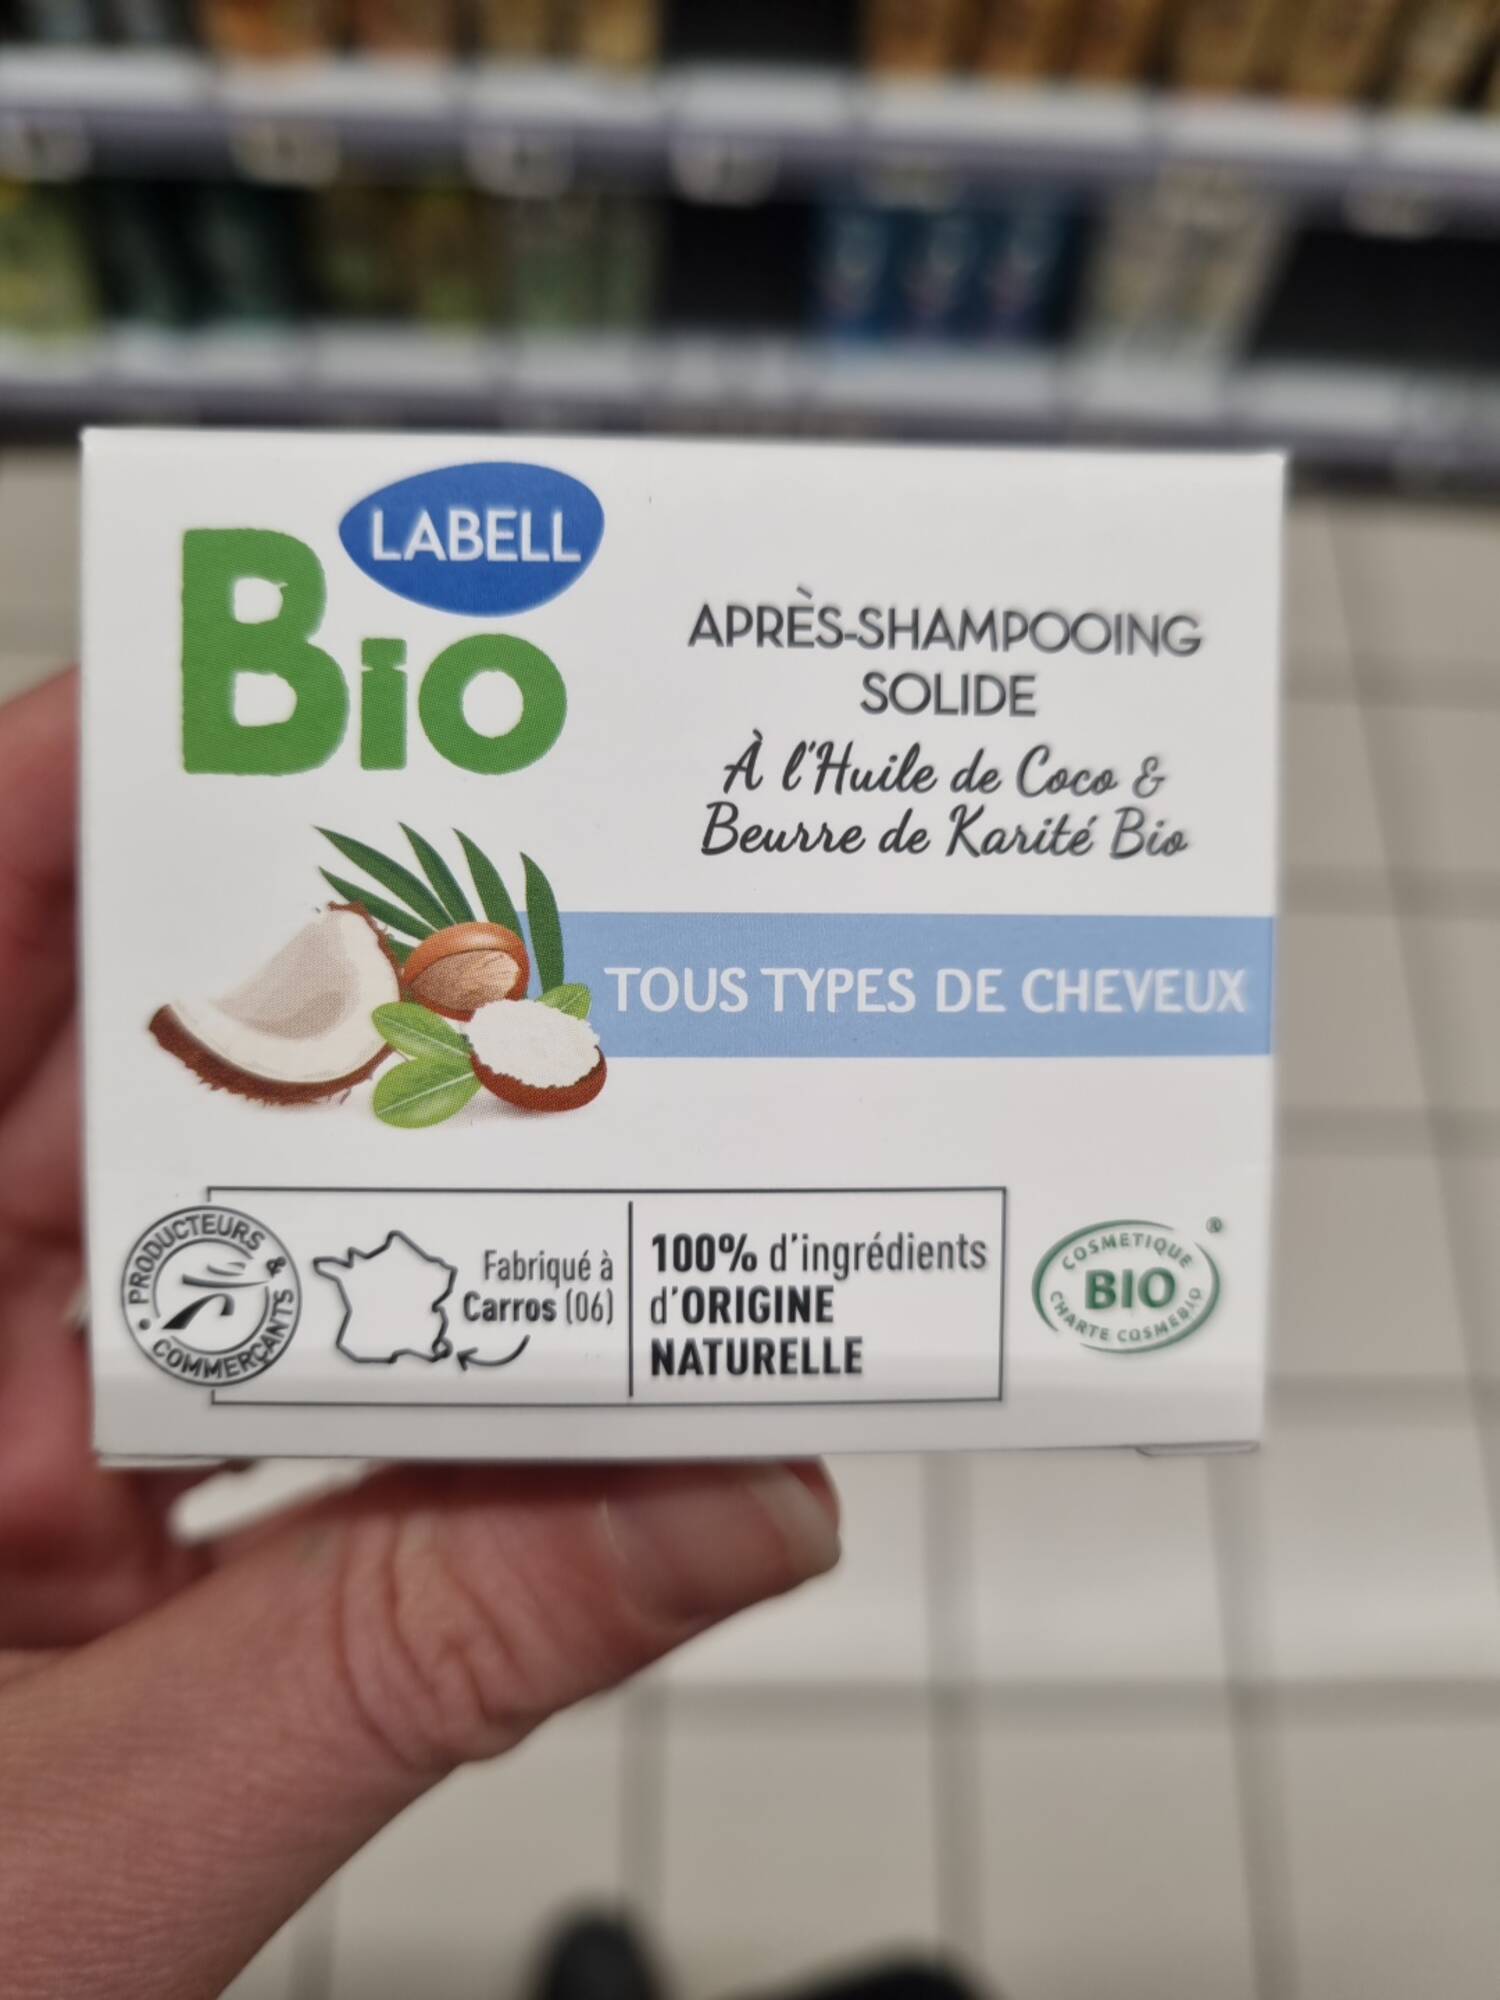 LABELL BIO - Après shampooing solide bio